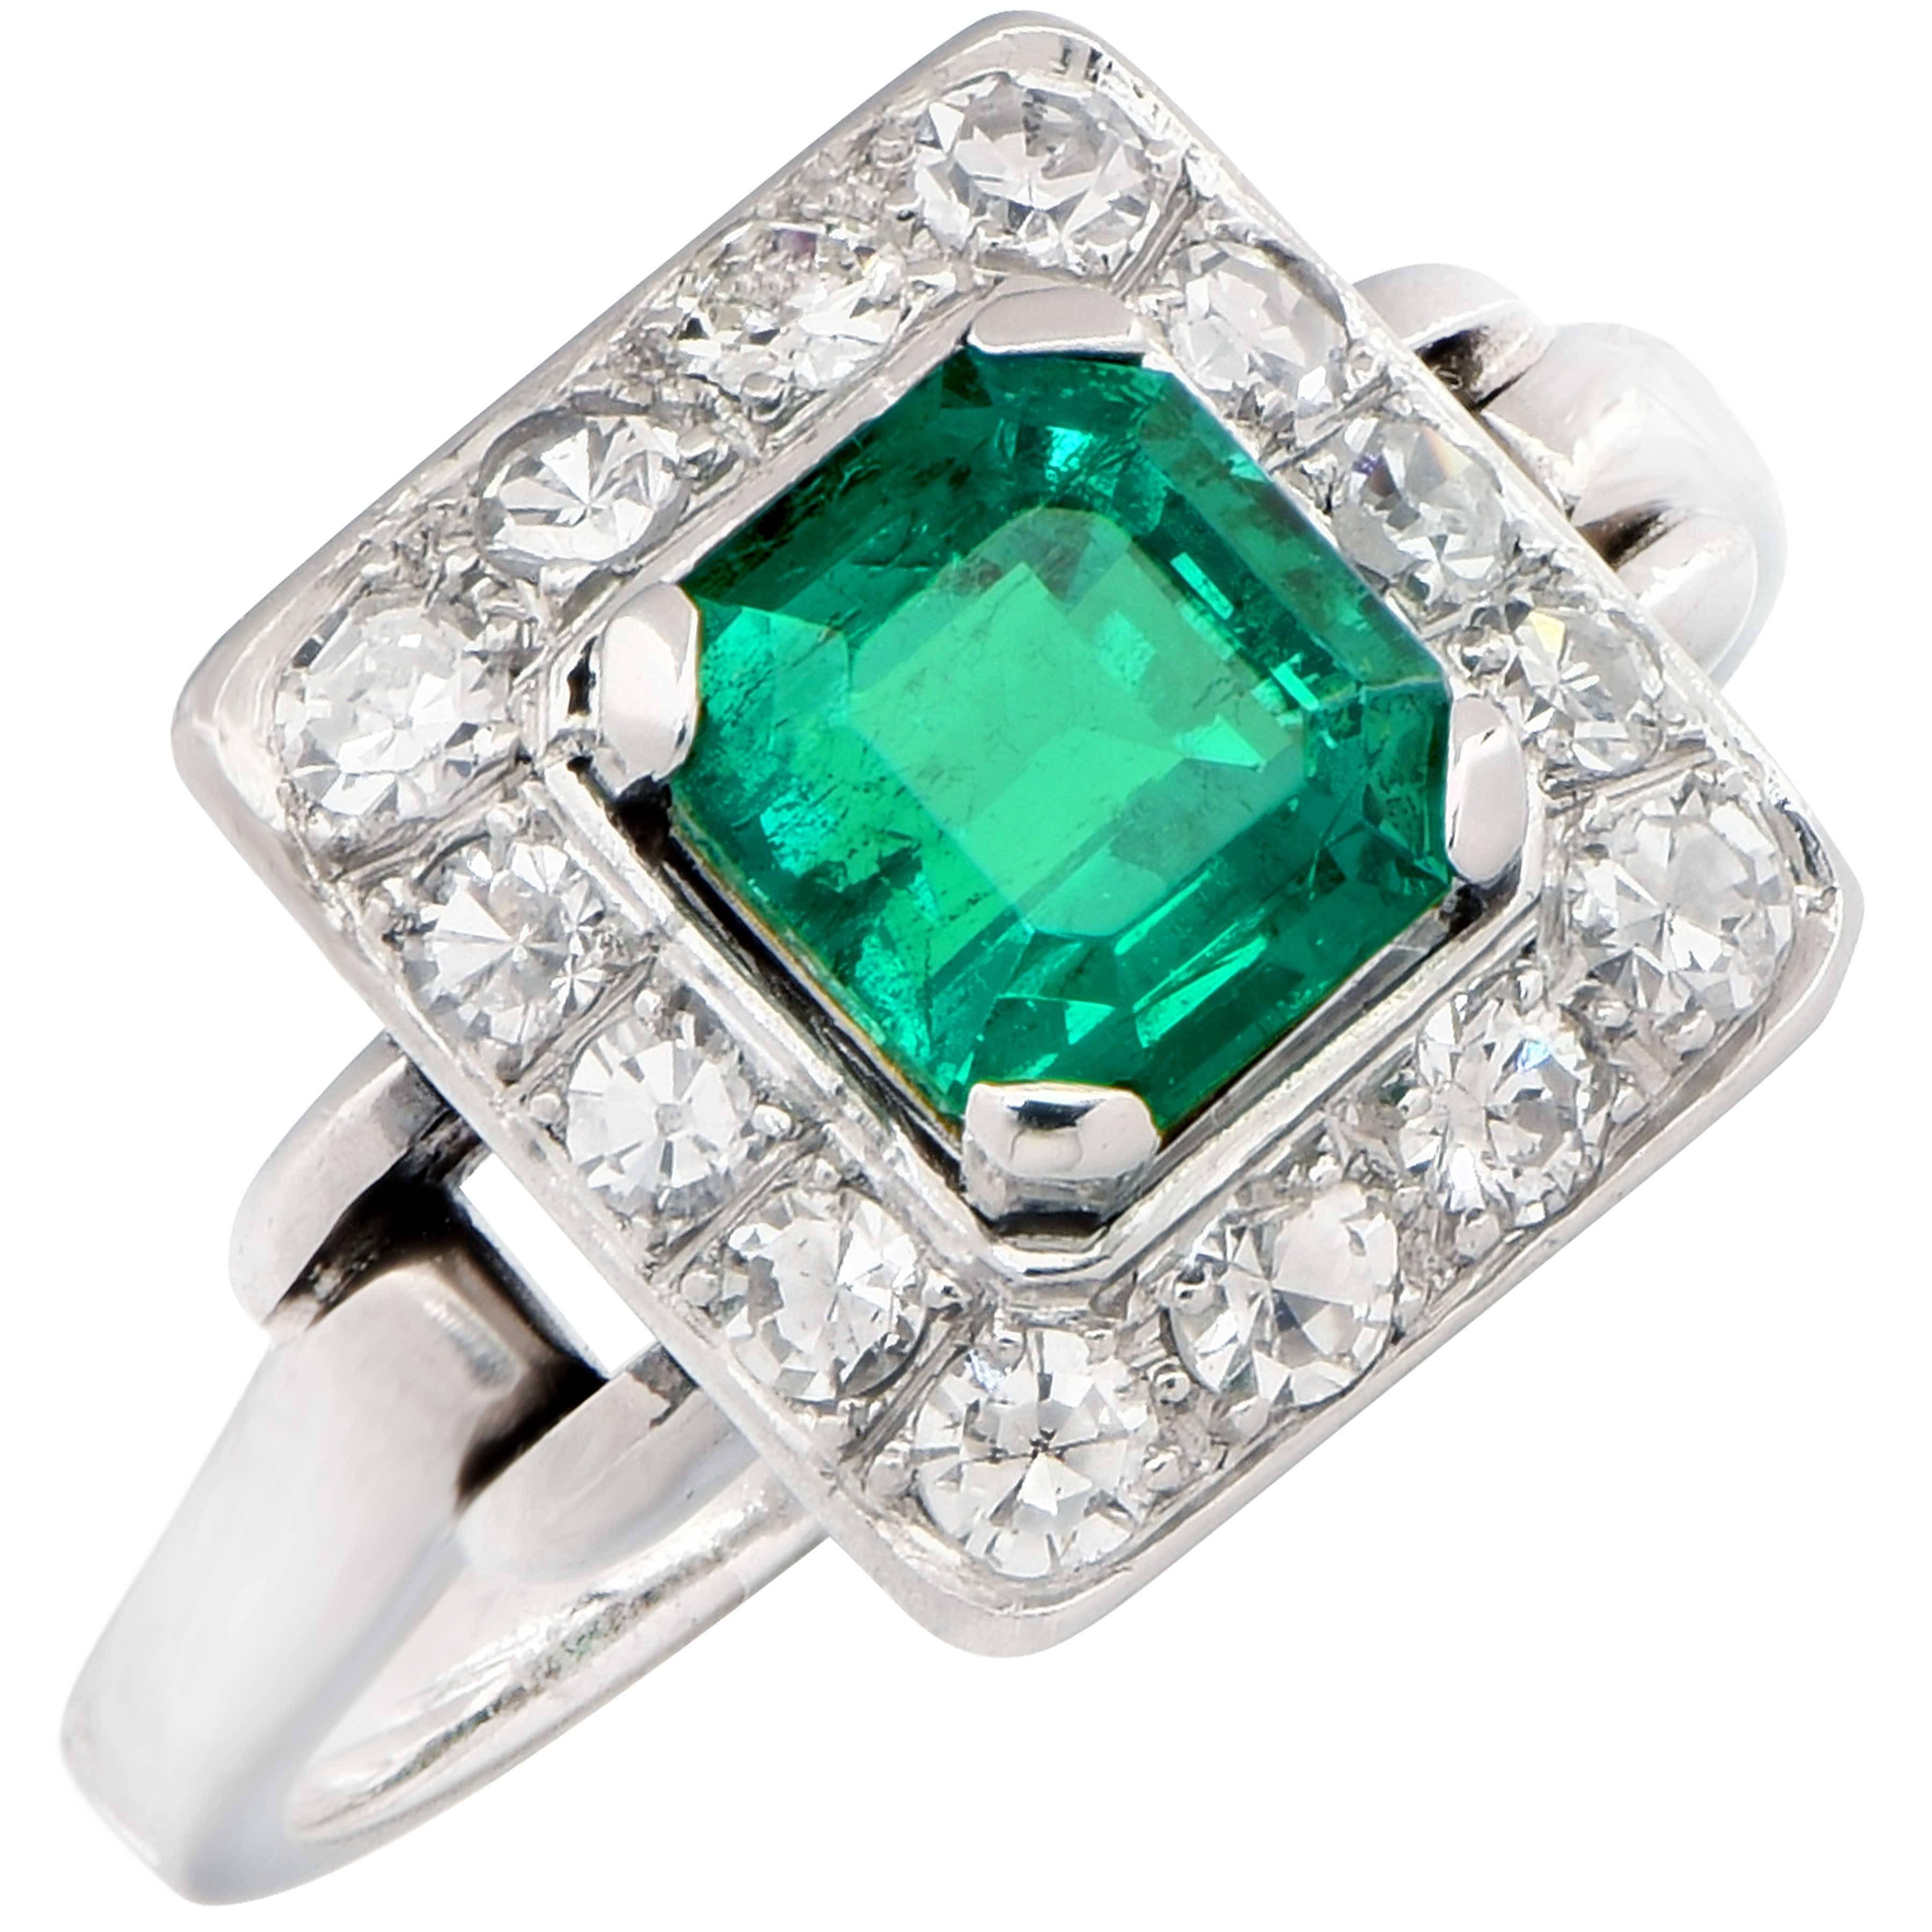 Emerald Cut 1.36 Carat Colombian Emerald No Treatment AGL Diamond Ring For Sale